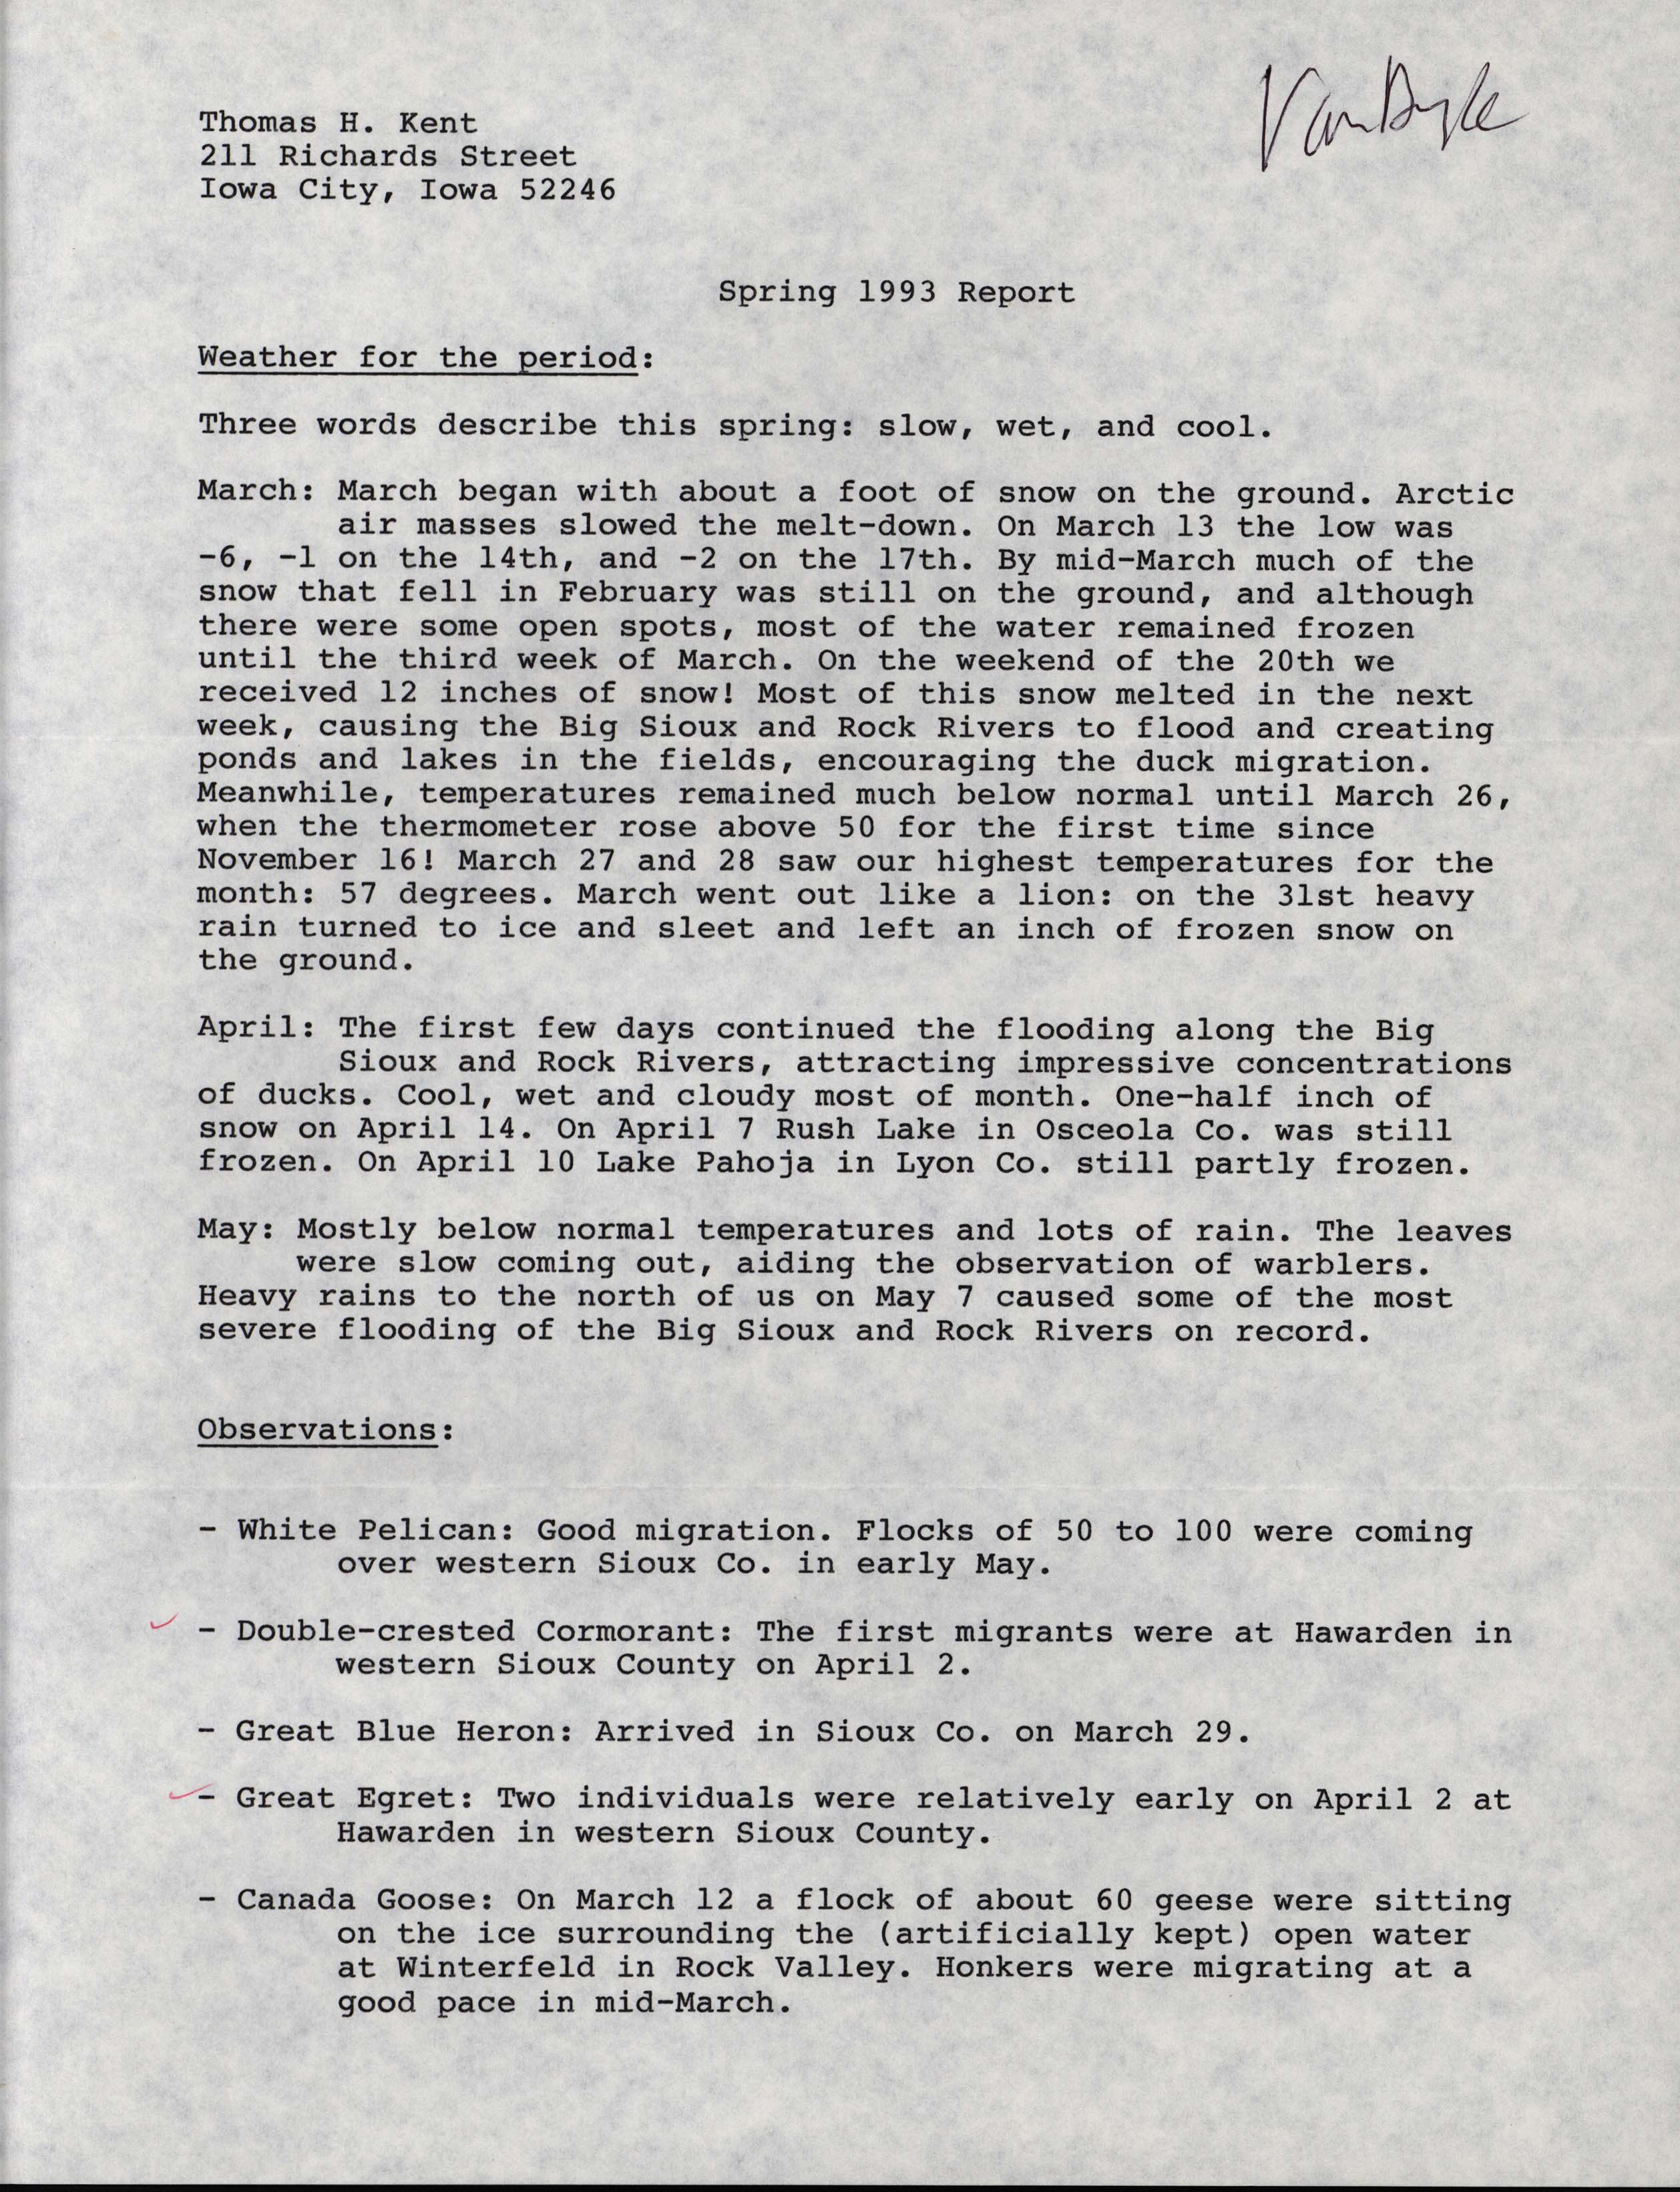 John Van Dyk letter to Thomas Kent regarding spring 1993 report, June 1, 1993